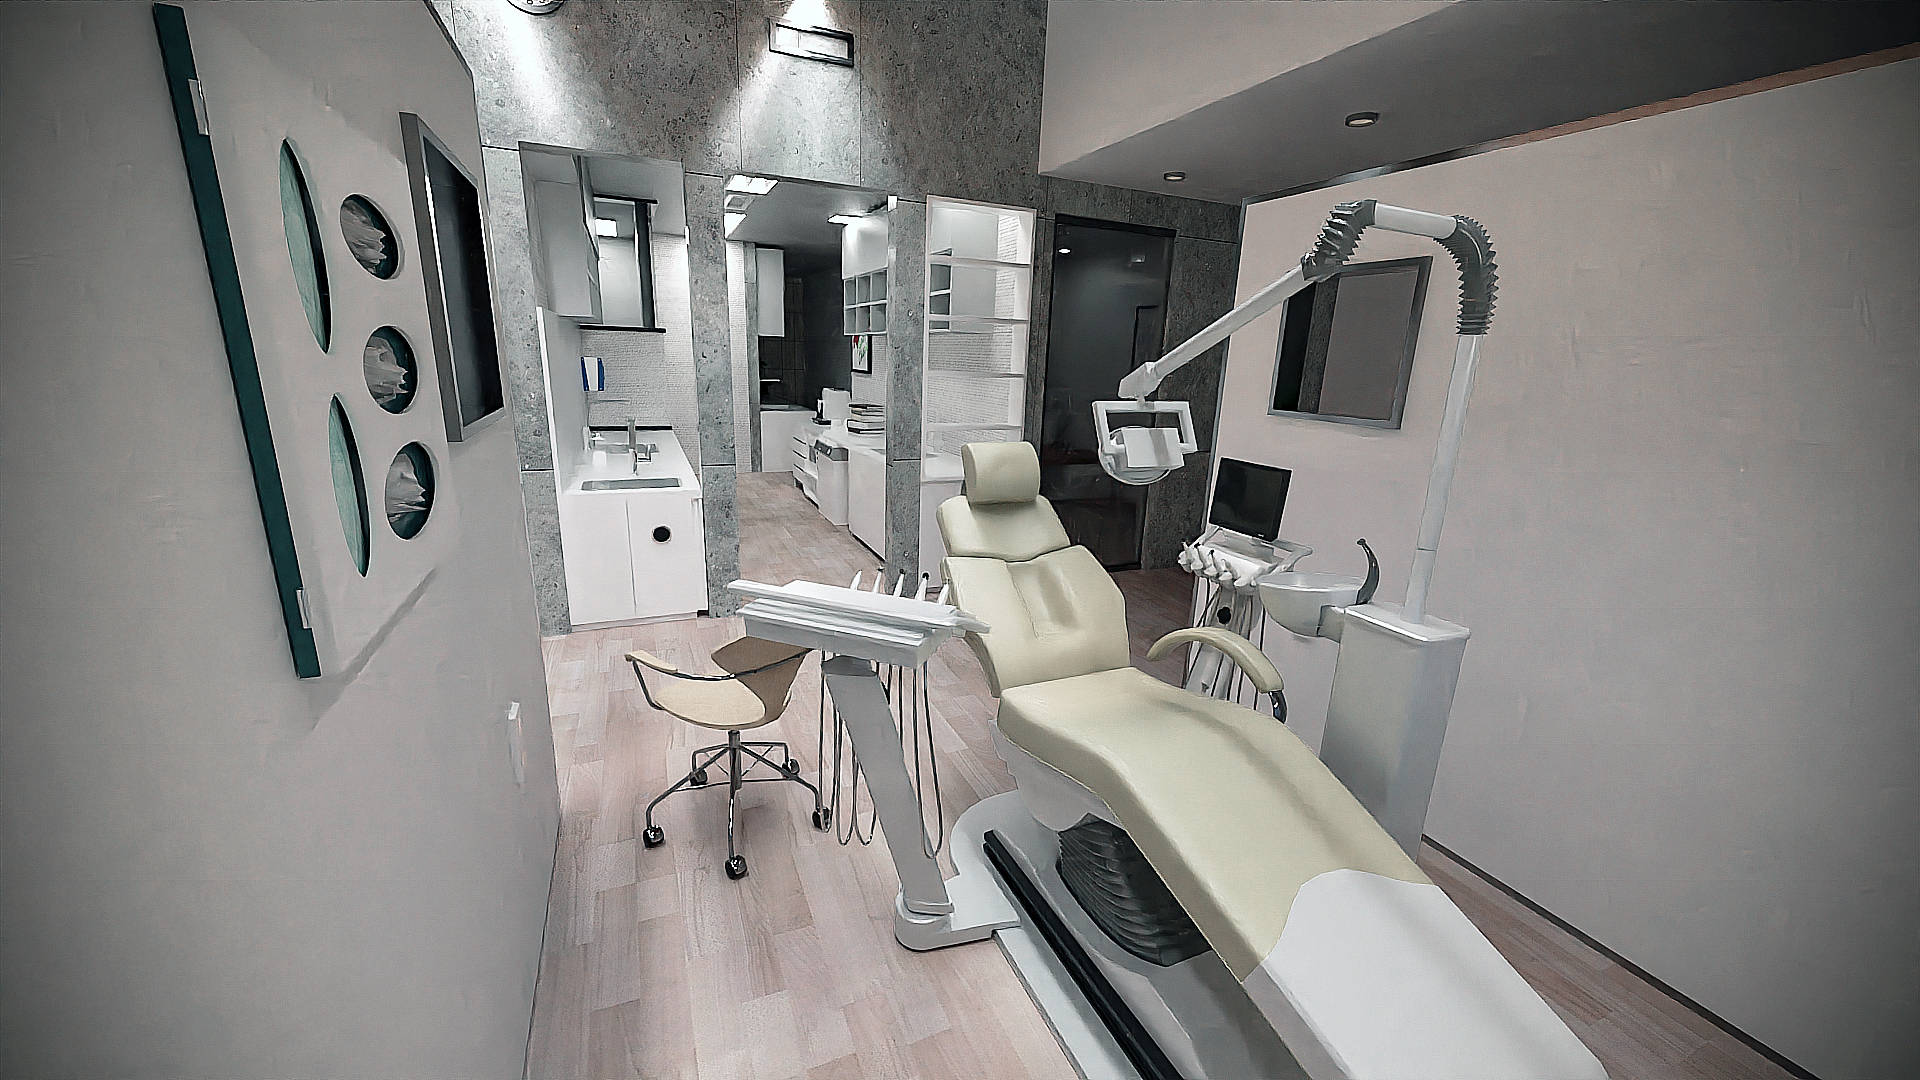 Kyoto Dental Clinic by: Tesla3dCorp, 3D Models by Daz 3D